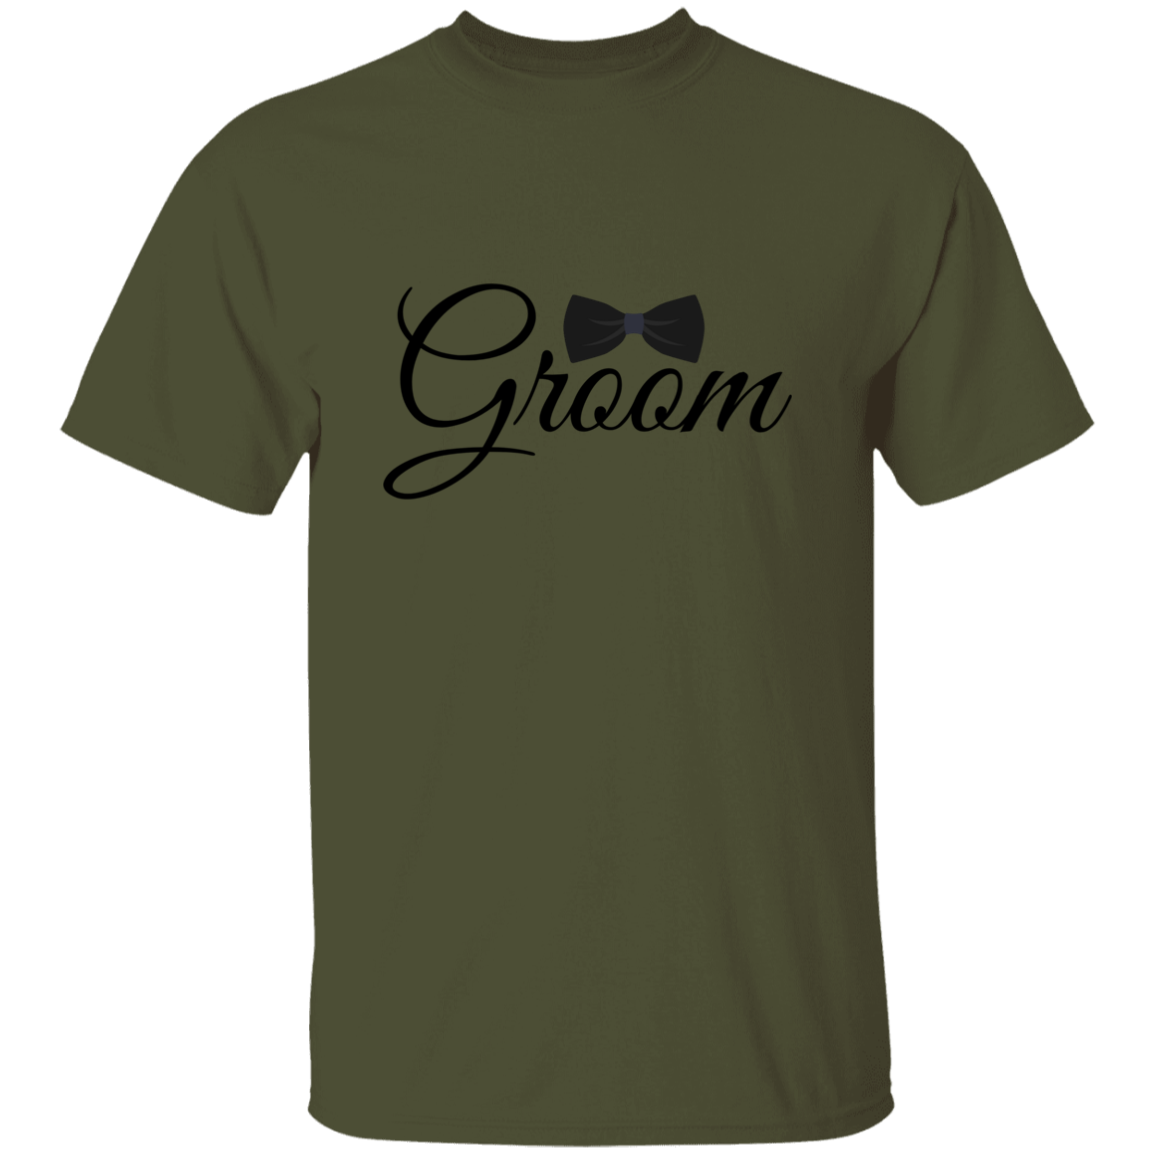 Groom ~ With Bow Tie / Wedding T-Shirt, Wedding Attire,